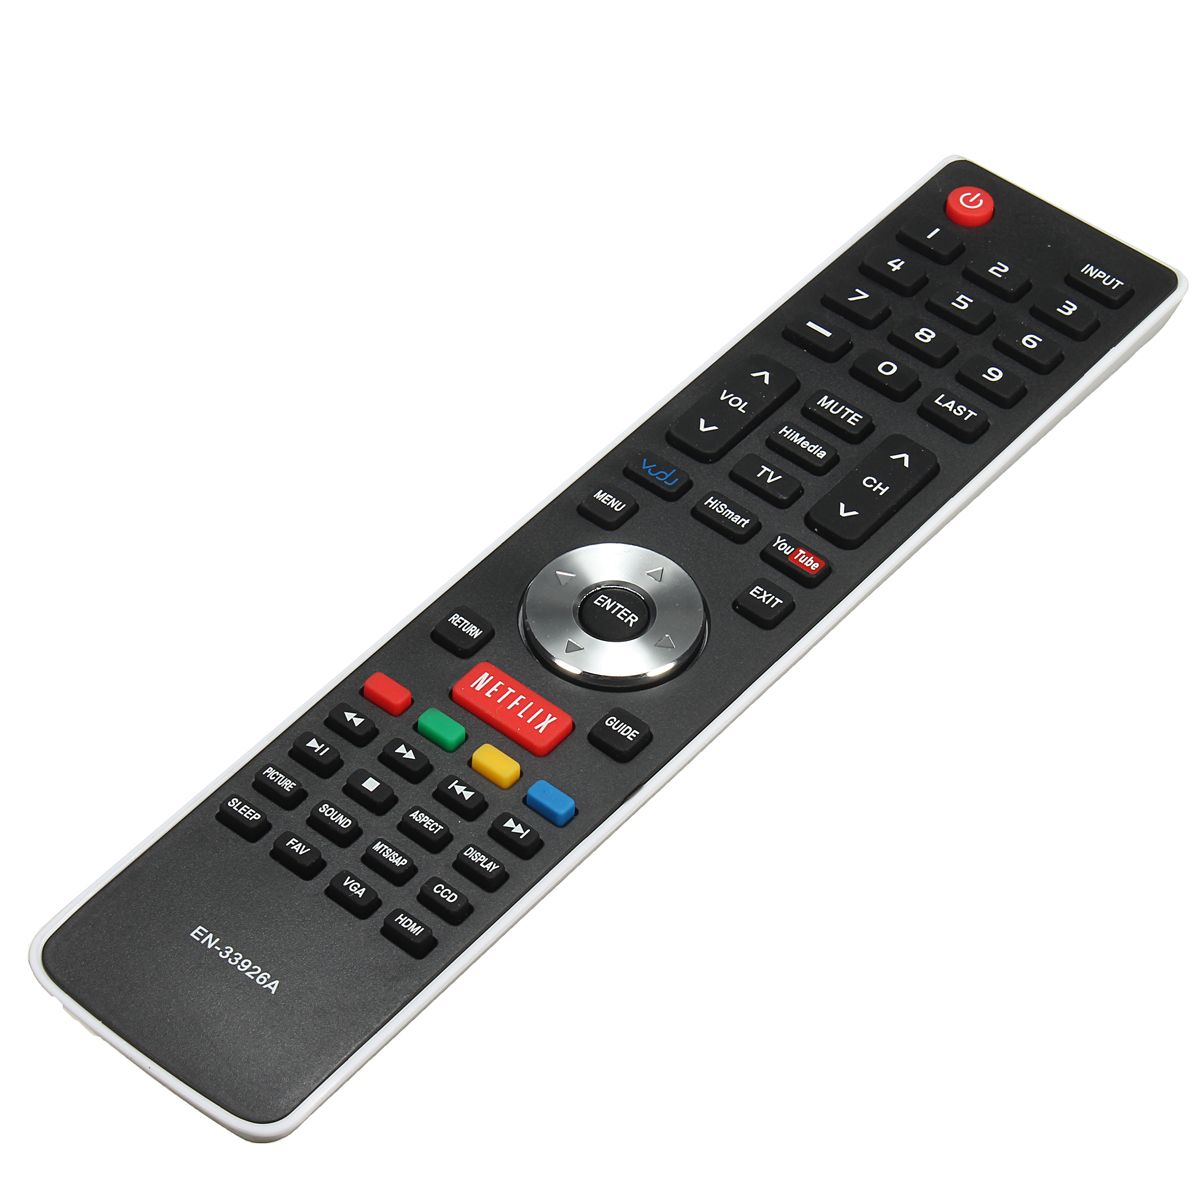 TV-Remote-Control-EN-33926A-Repalcemeng-for-Hisense-LCD-LED-HDTV-EN-33925A-32K366W-40K366WB-1123296